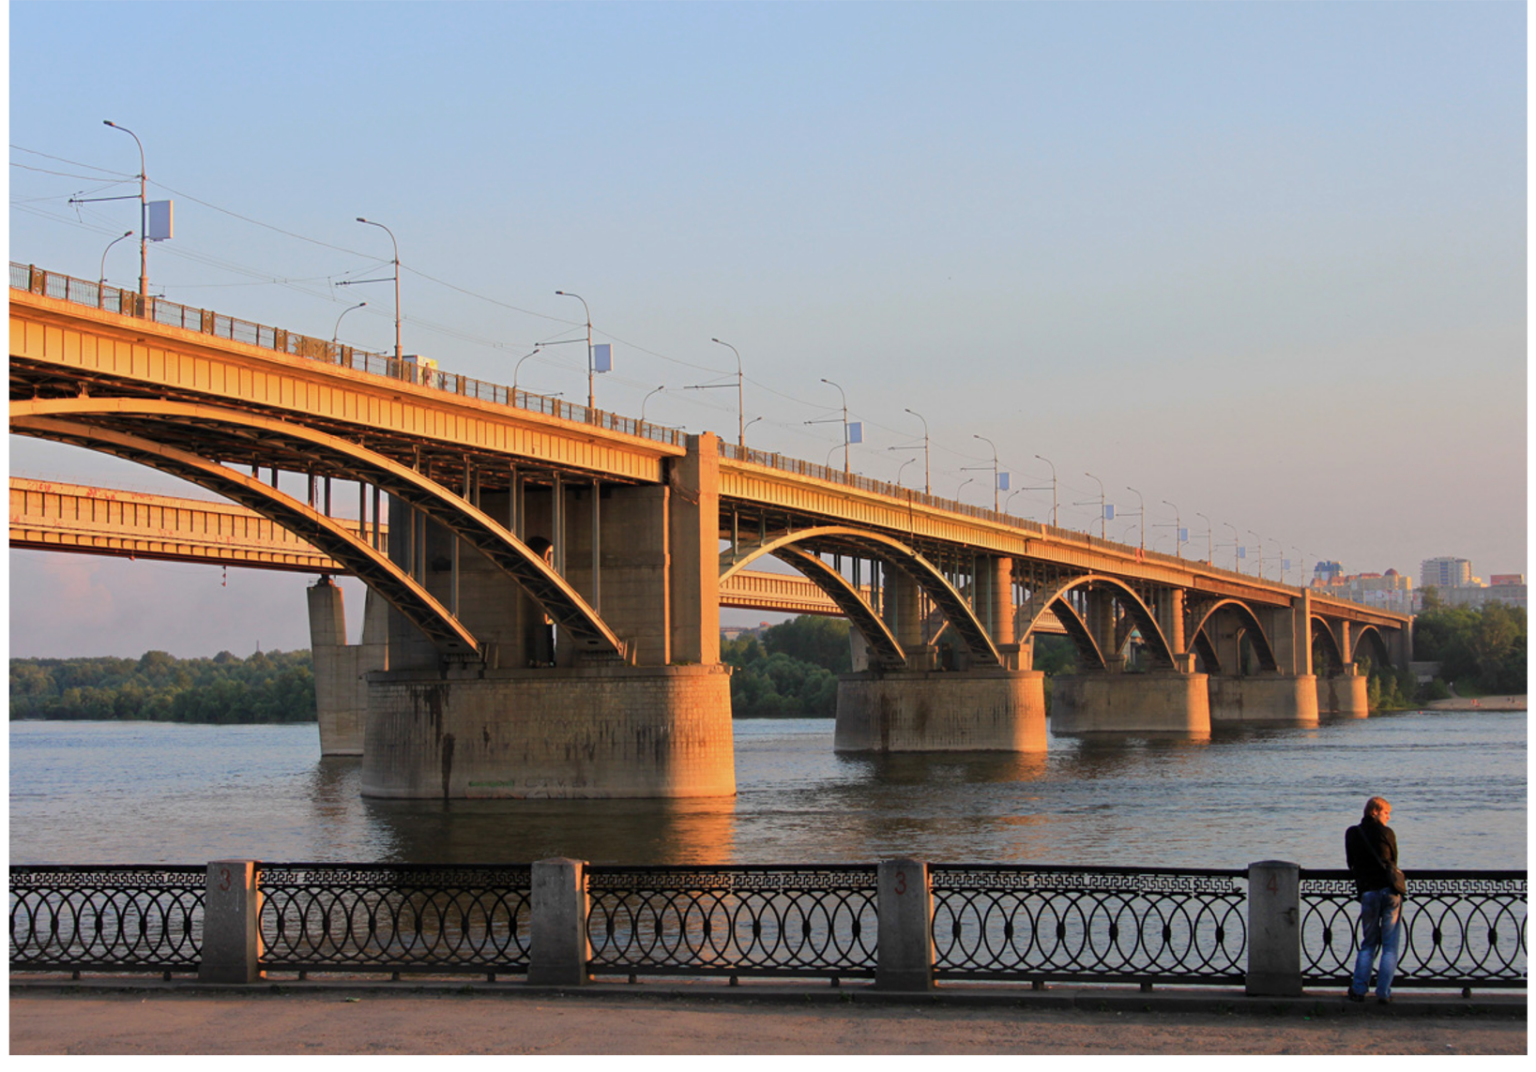 Мосты новосибирска фото с названиями